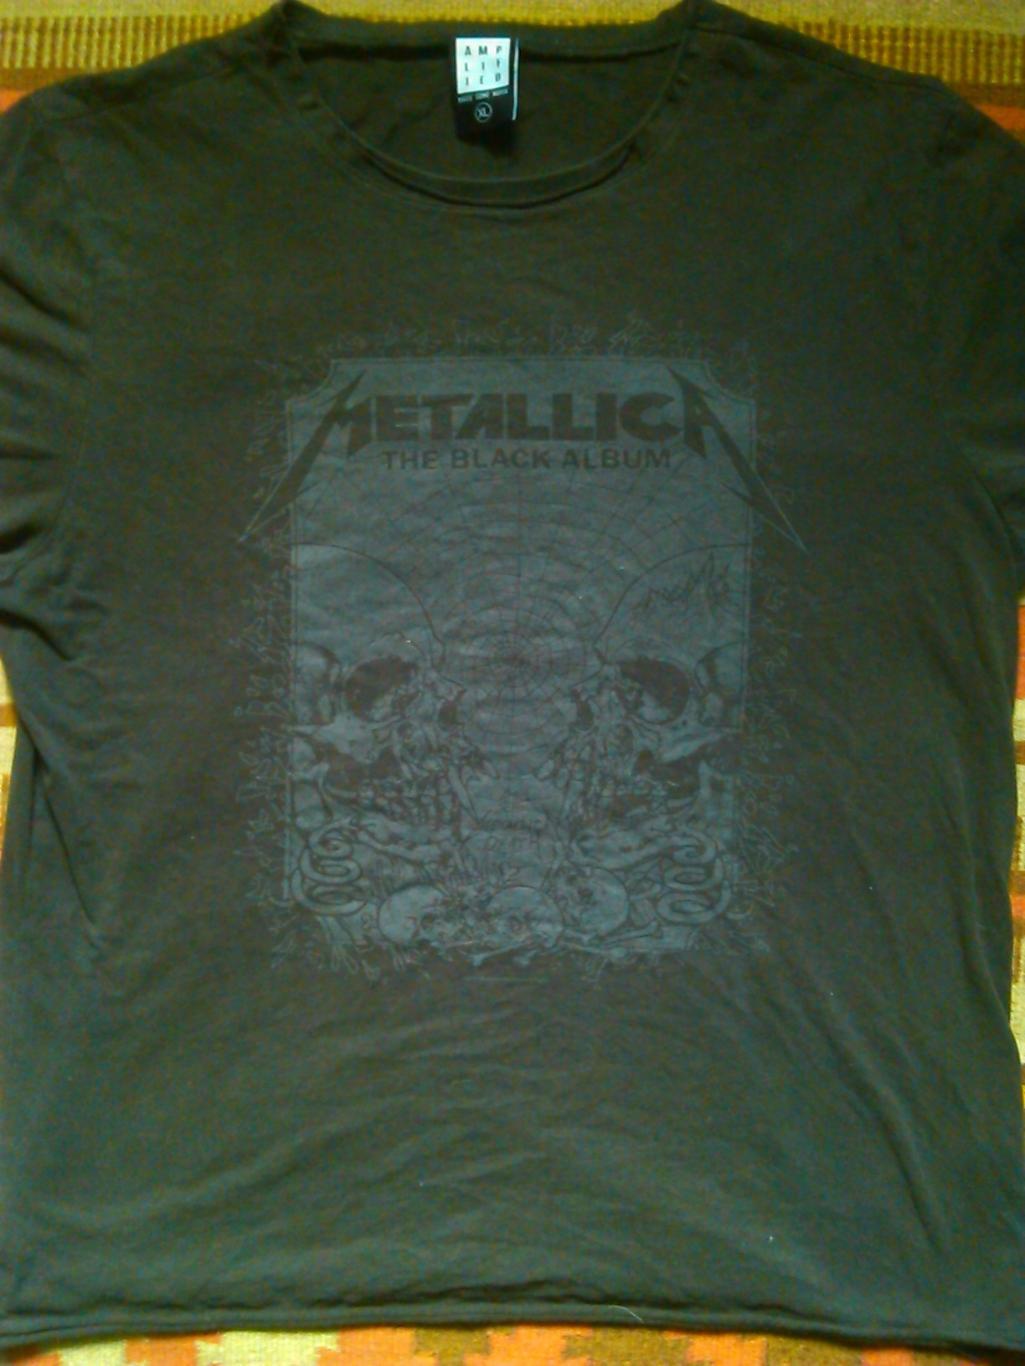 футболка с принтом METALLICA-the Black Album. Оптом скидки до 50%!